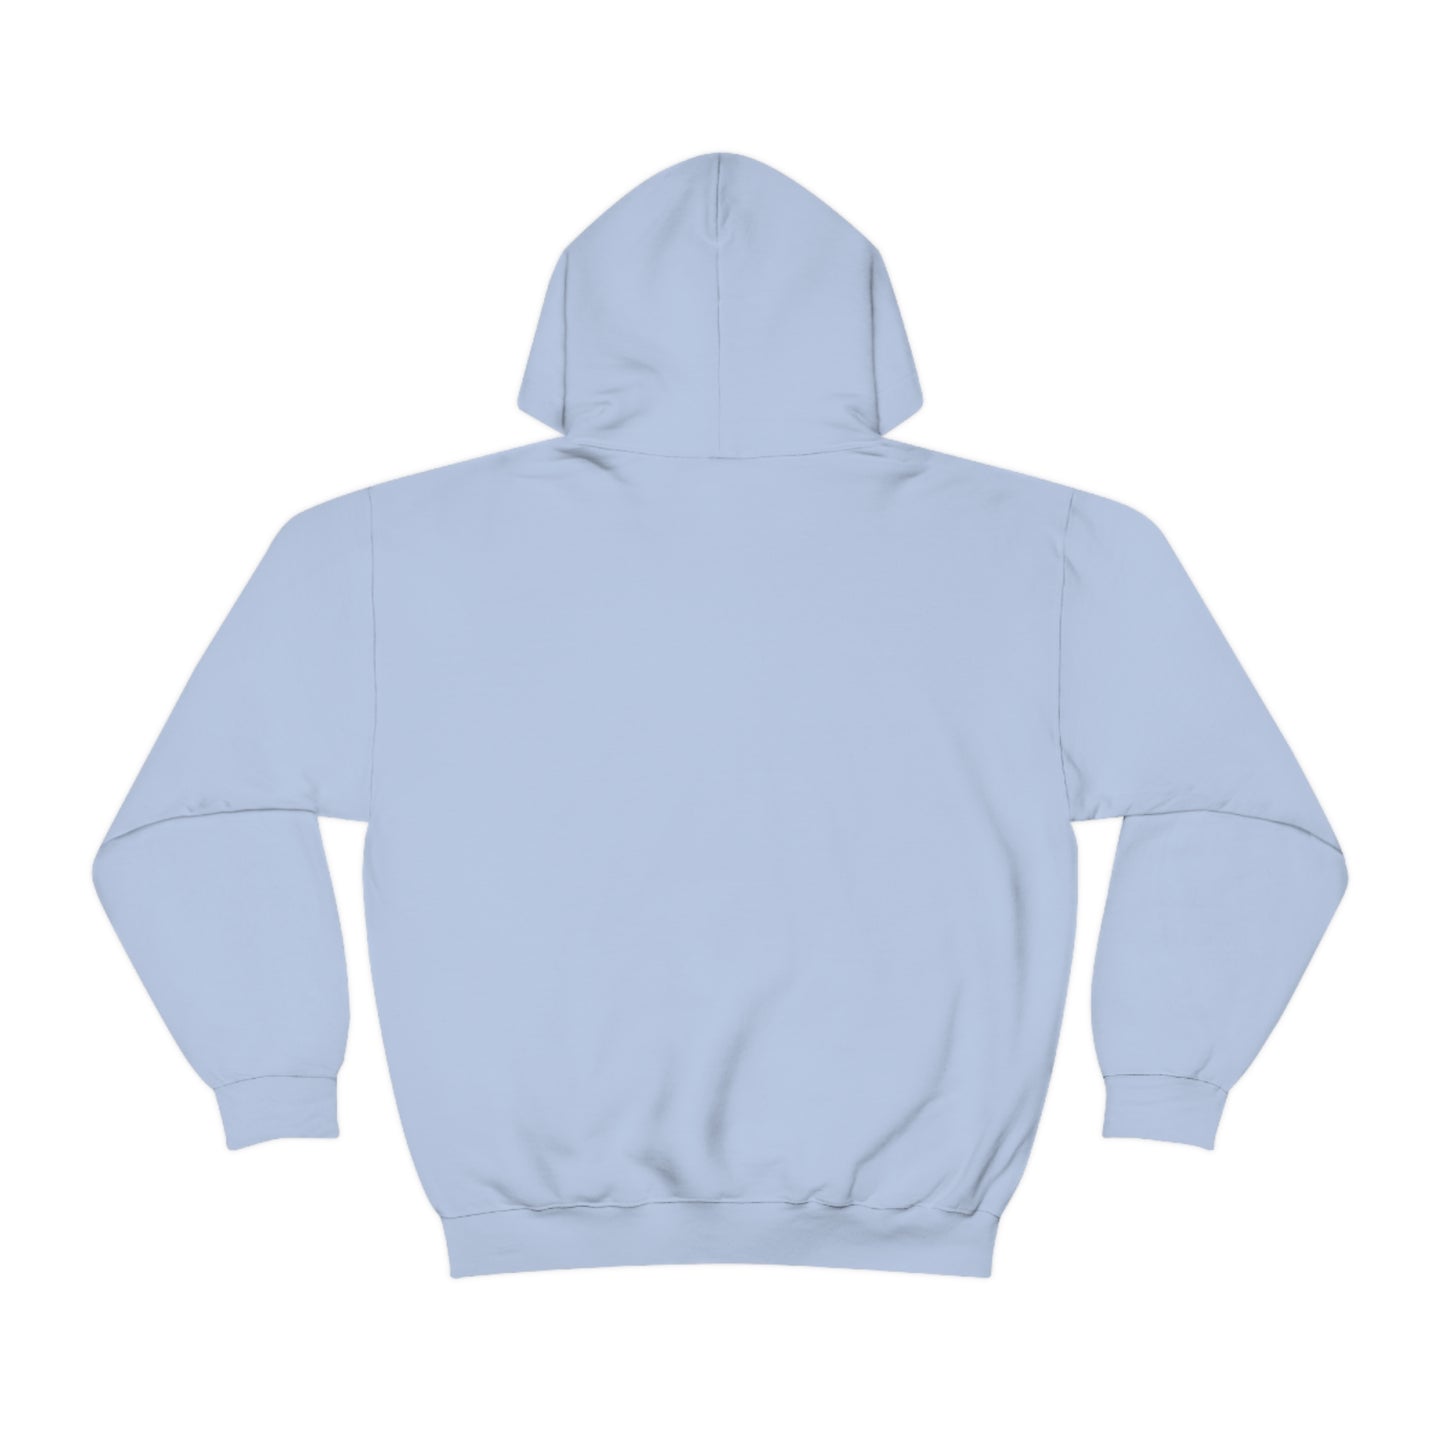 "1963 Tee" Unisex Heavy Blend™ Hooded Sweatshirt